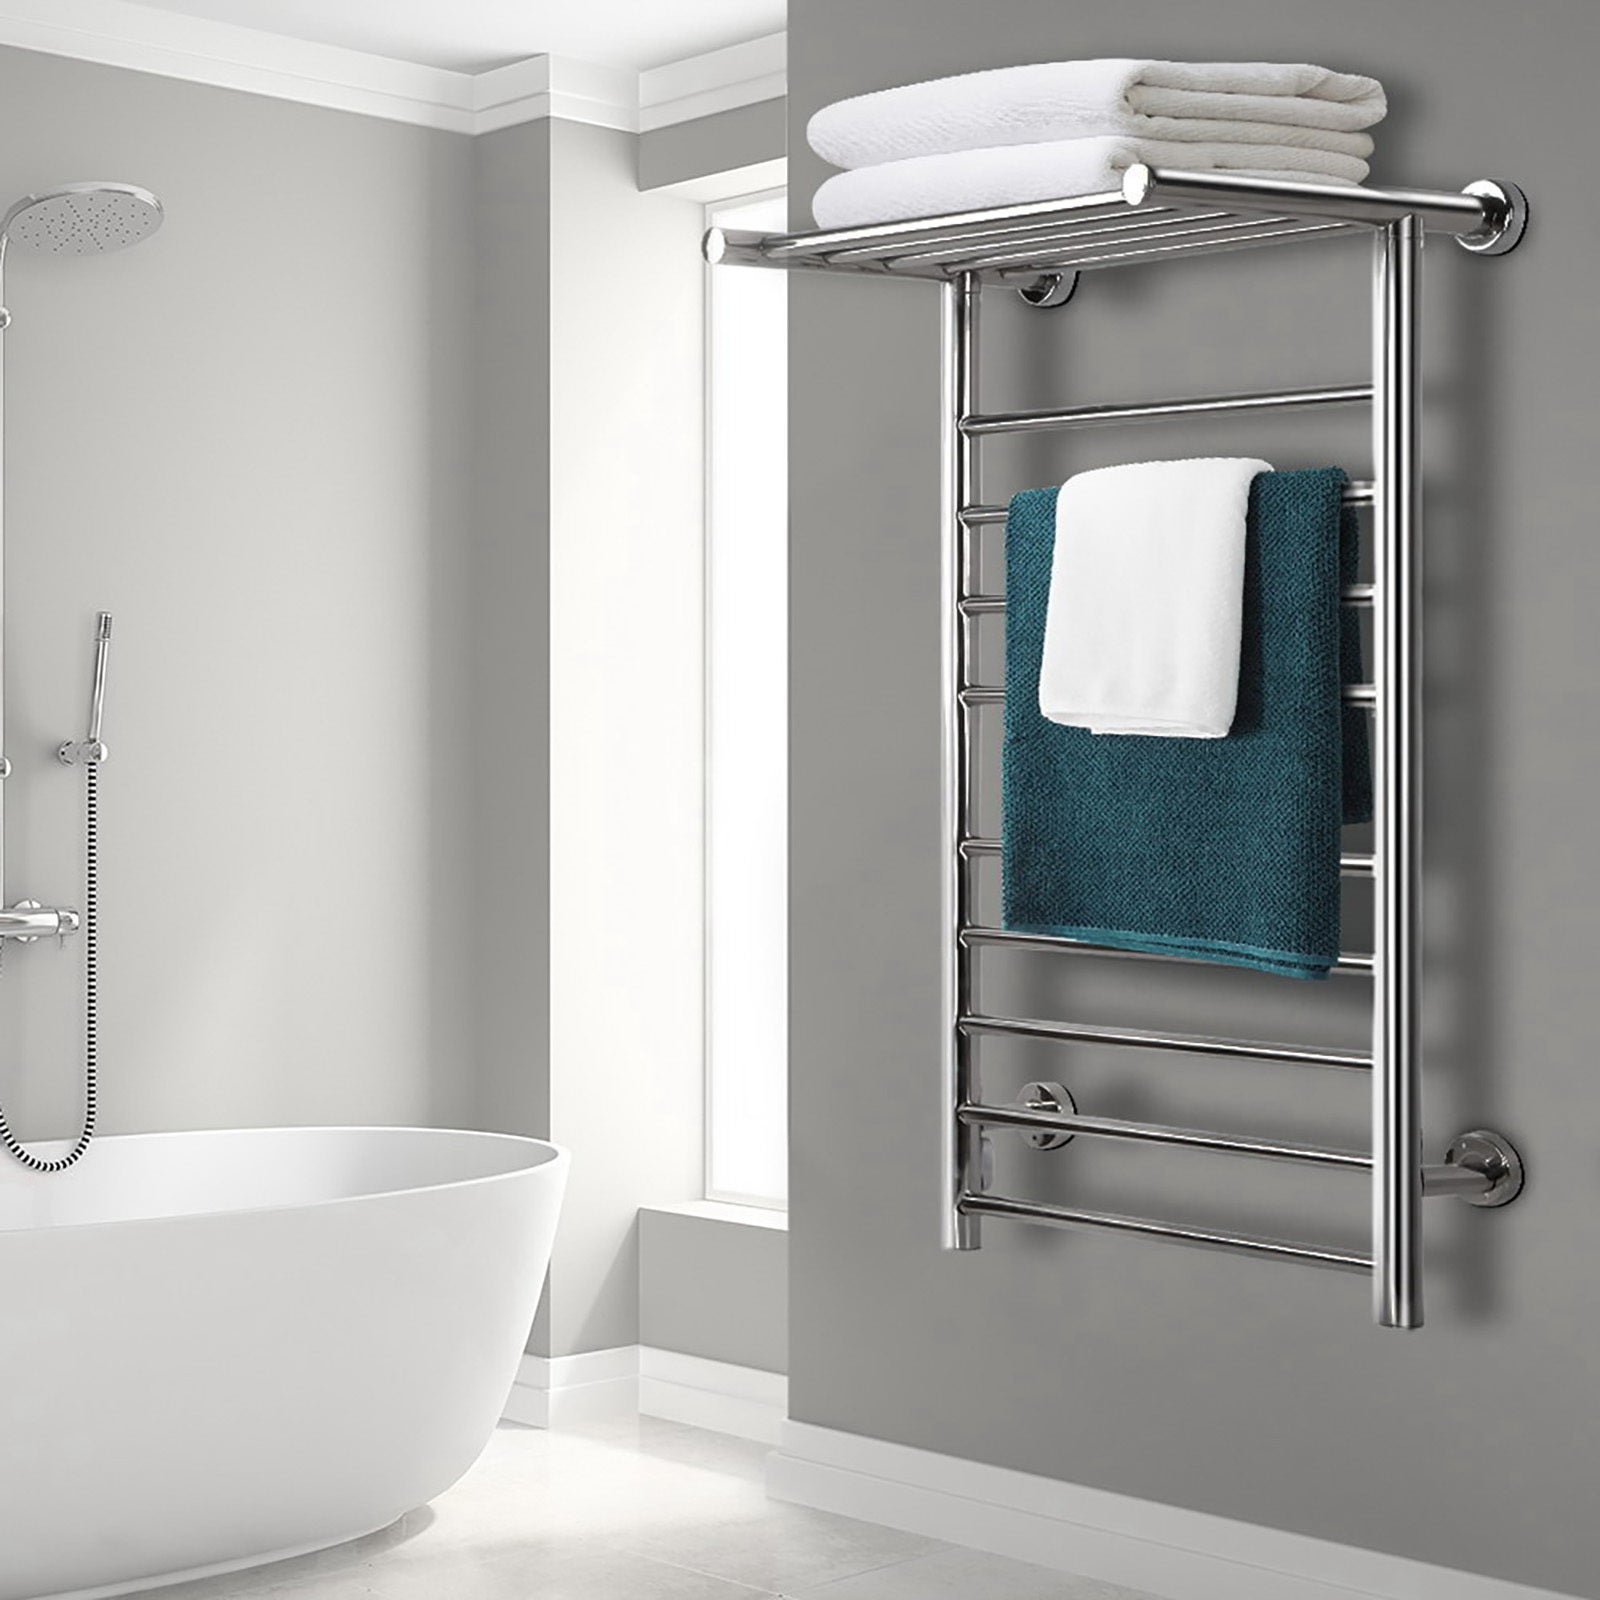 heated-towel-rail-bathroom-stainless-steel-electric-rails-warmer